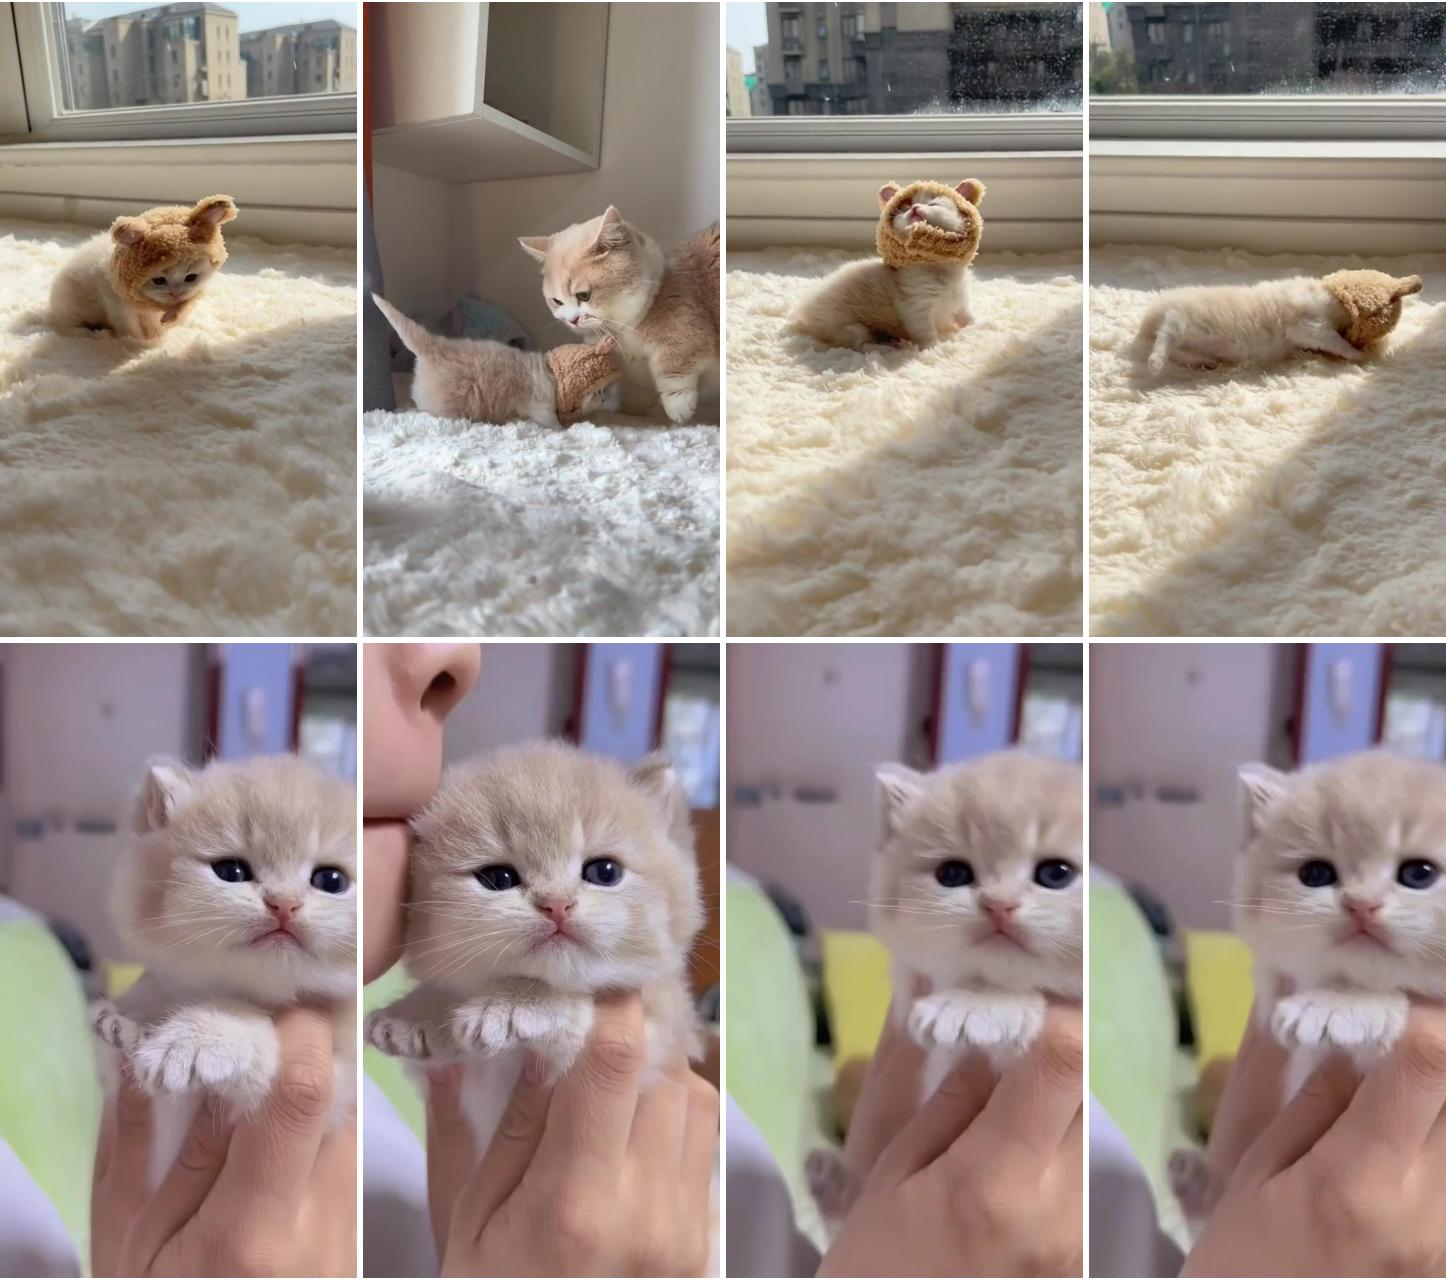 Cute cat; cute white baby kitten, adorable baby kitten, cat videos